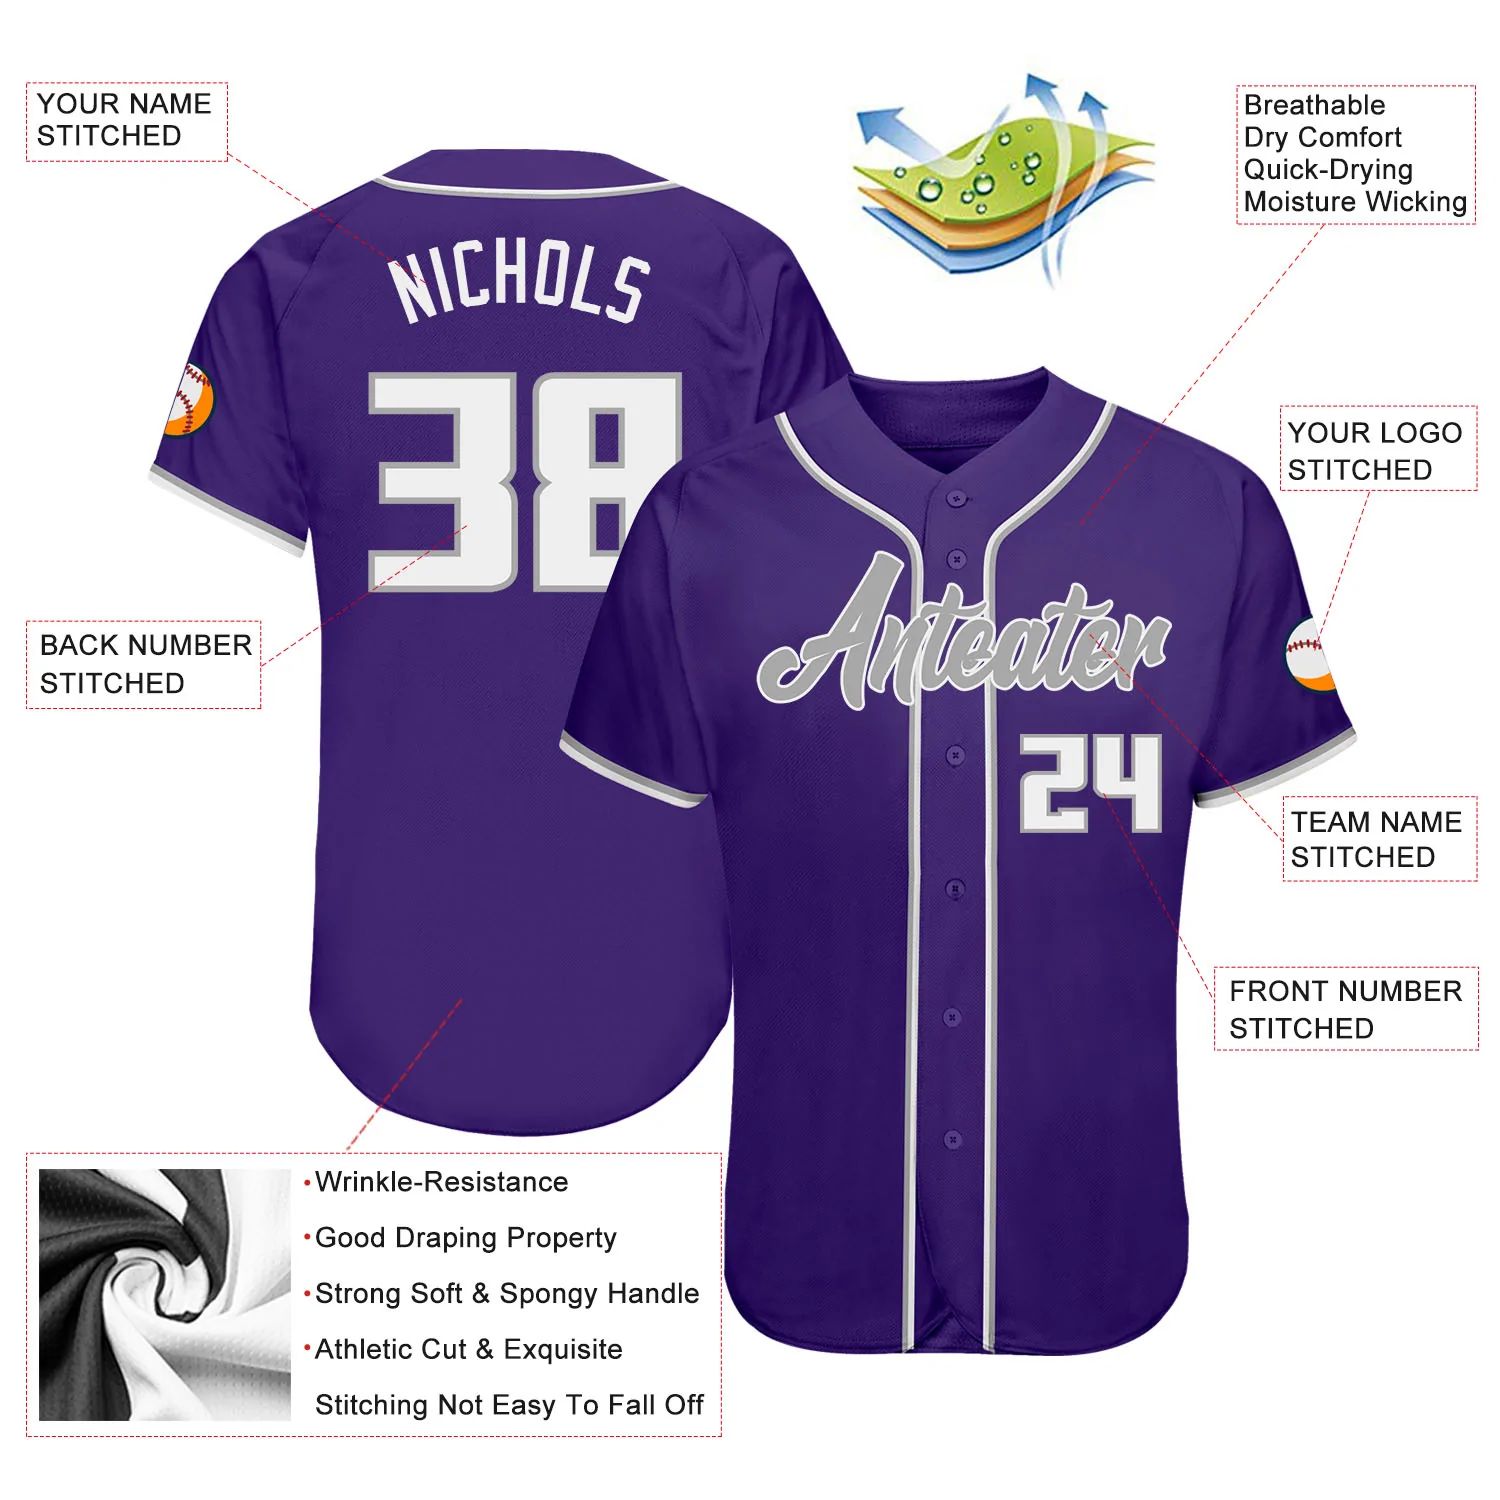 build-gray-purple-baseball-white-jersey-authentic-purple0083-online-3.jpg